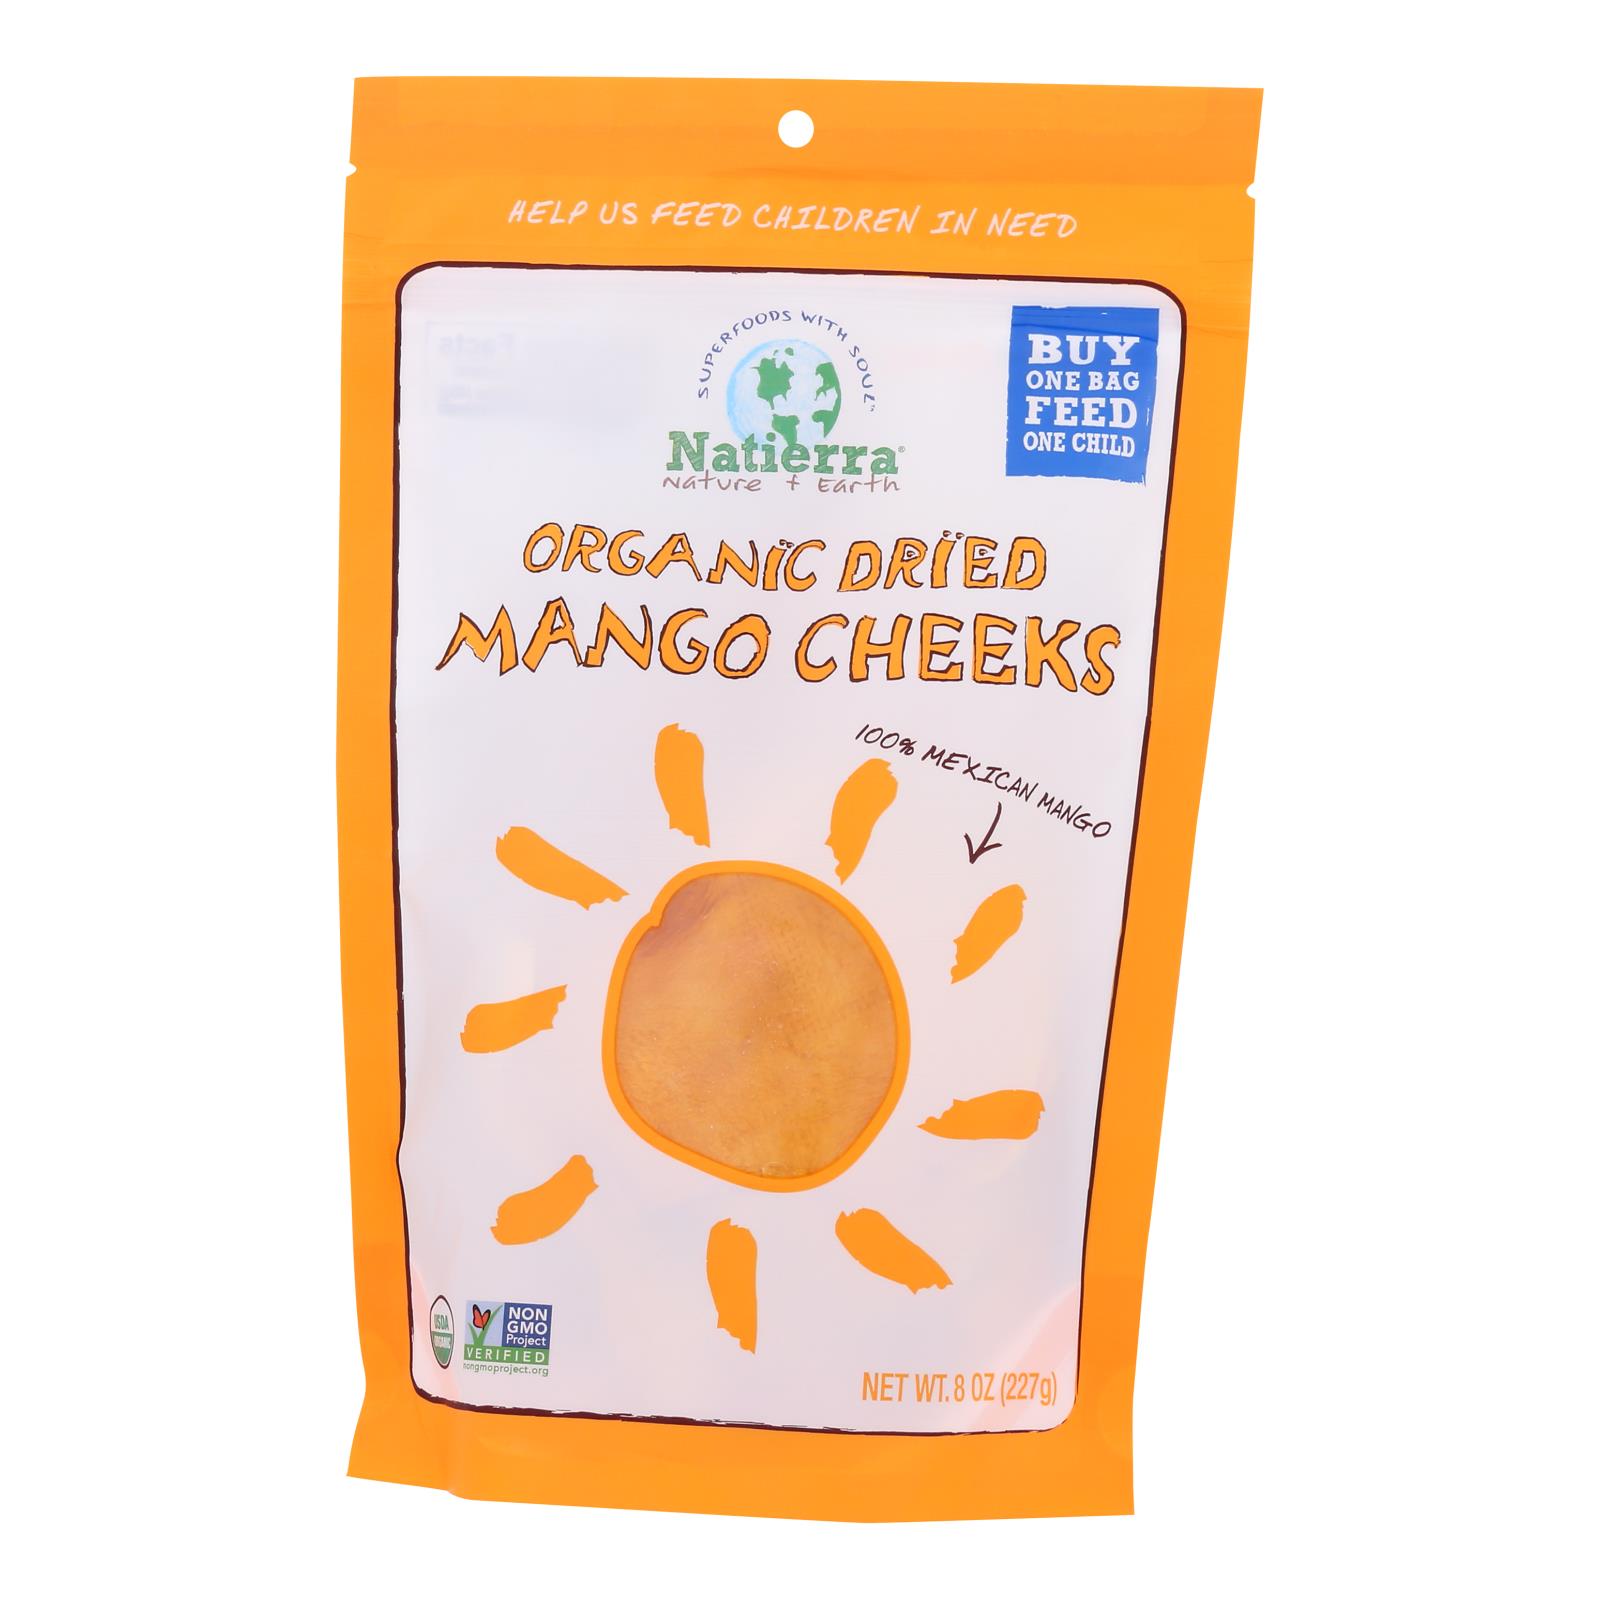 Natierra - Dried Mango Organic Cheeks - 6개 묶음상품 - 8 OZ